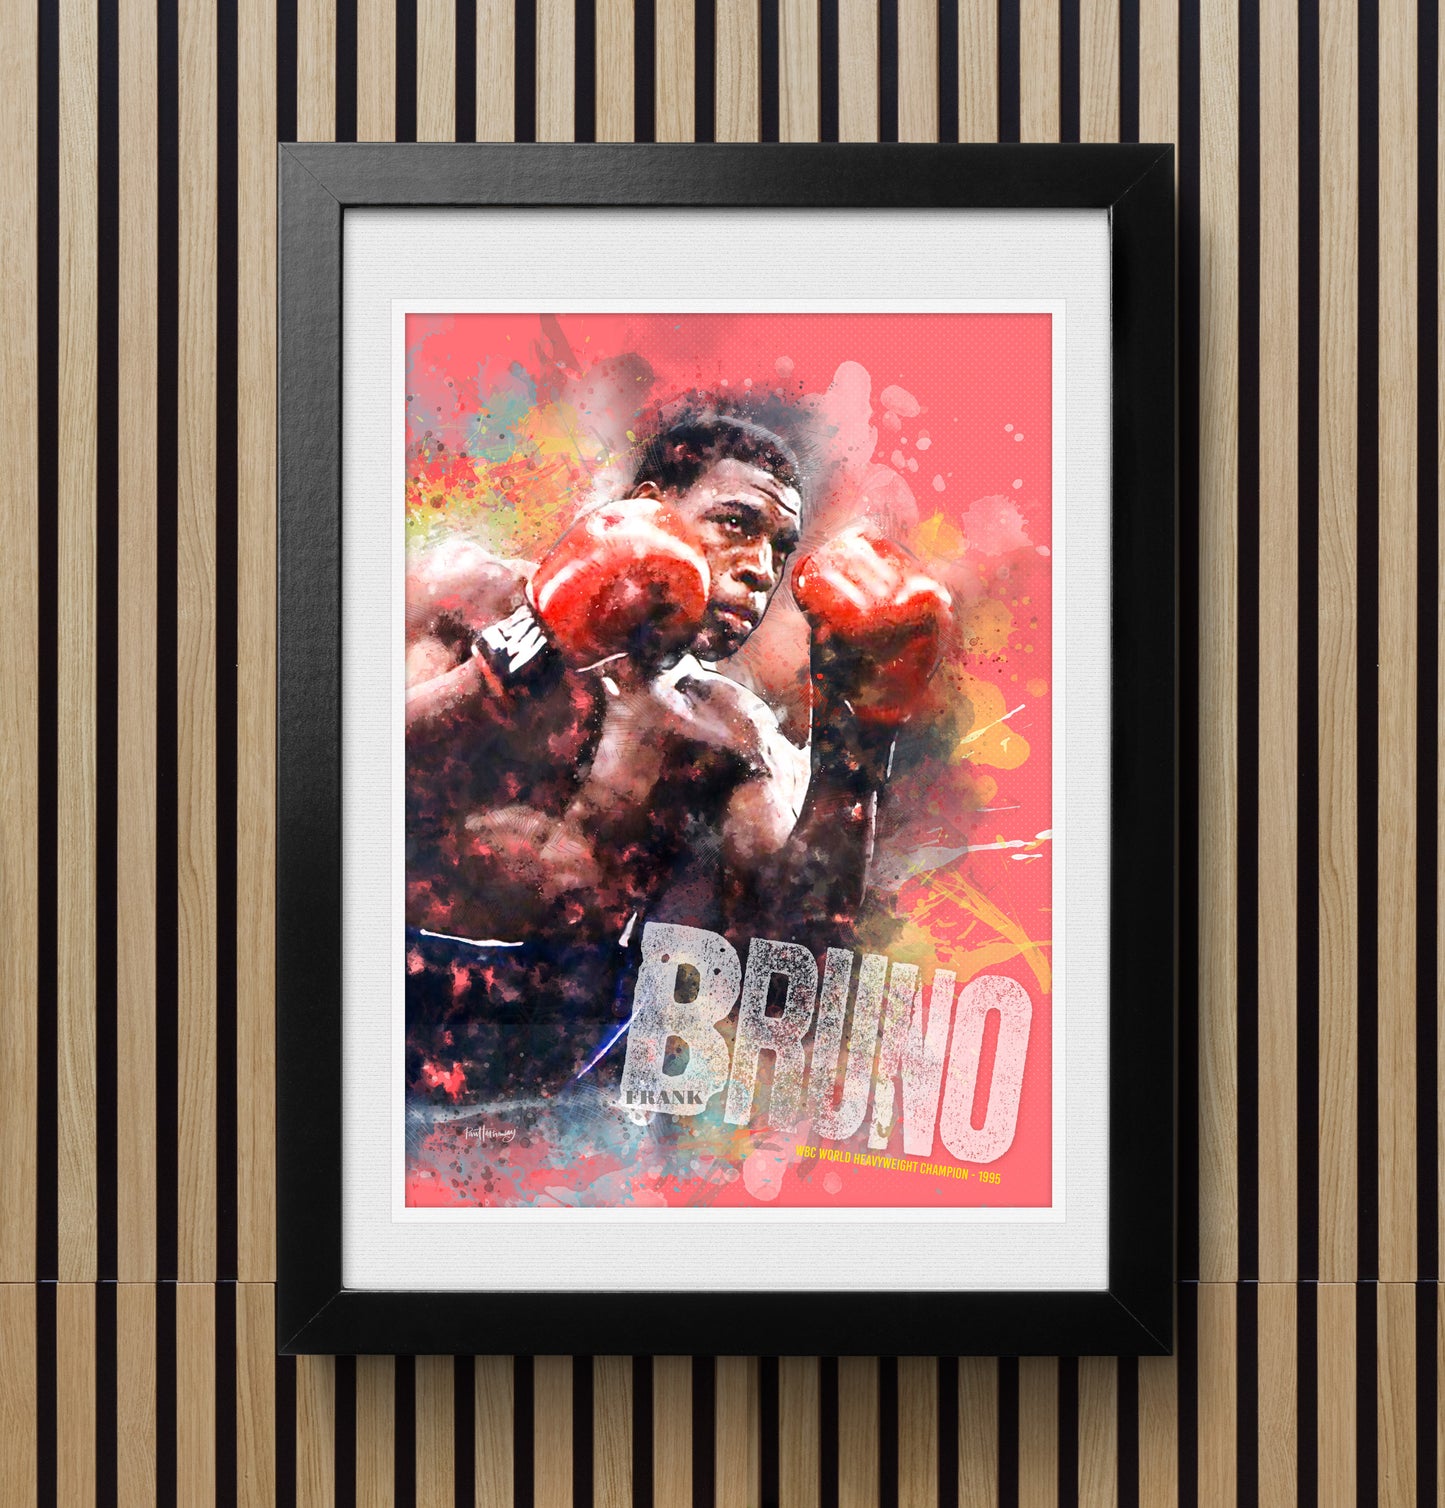 Frank Bruno - Boxing Art Print